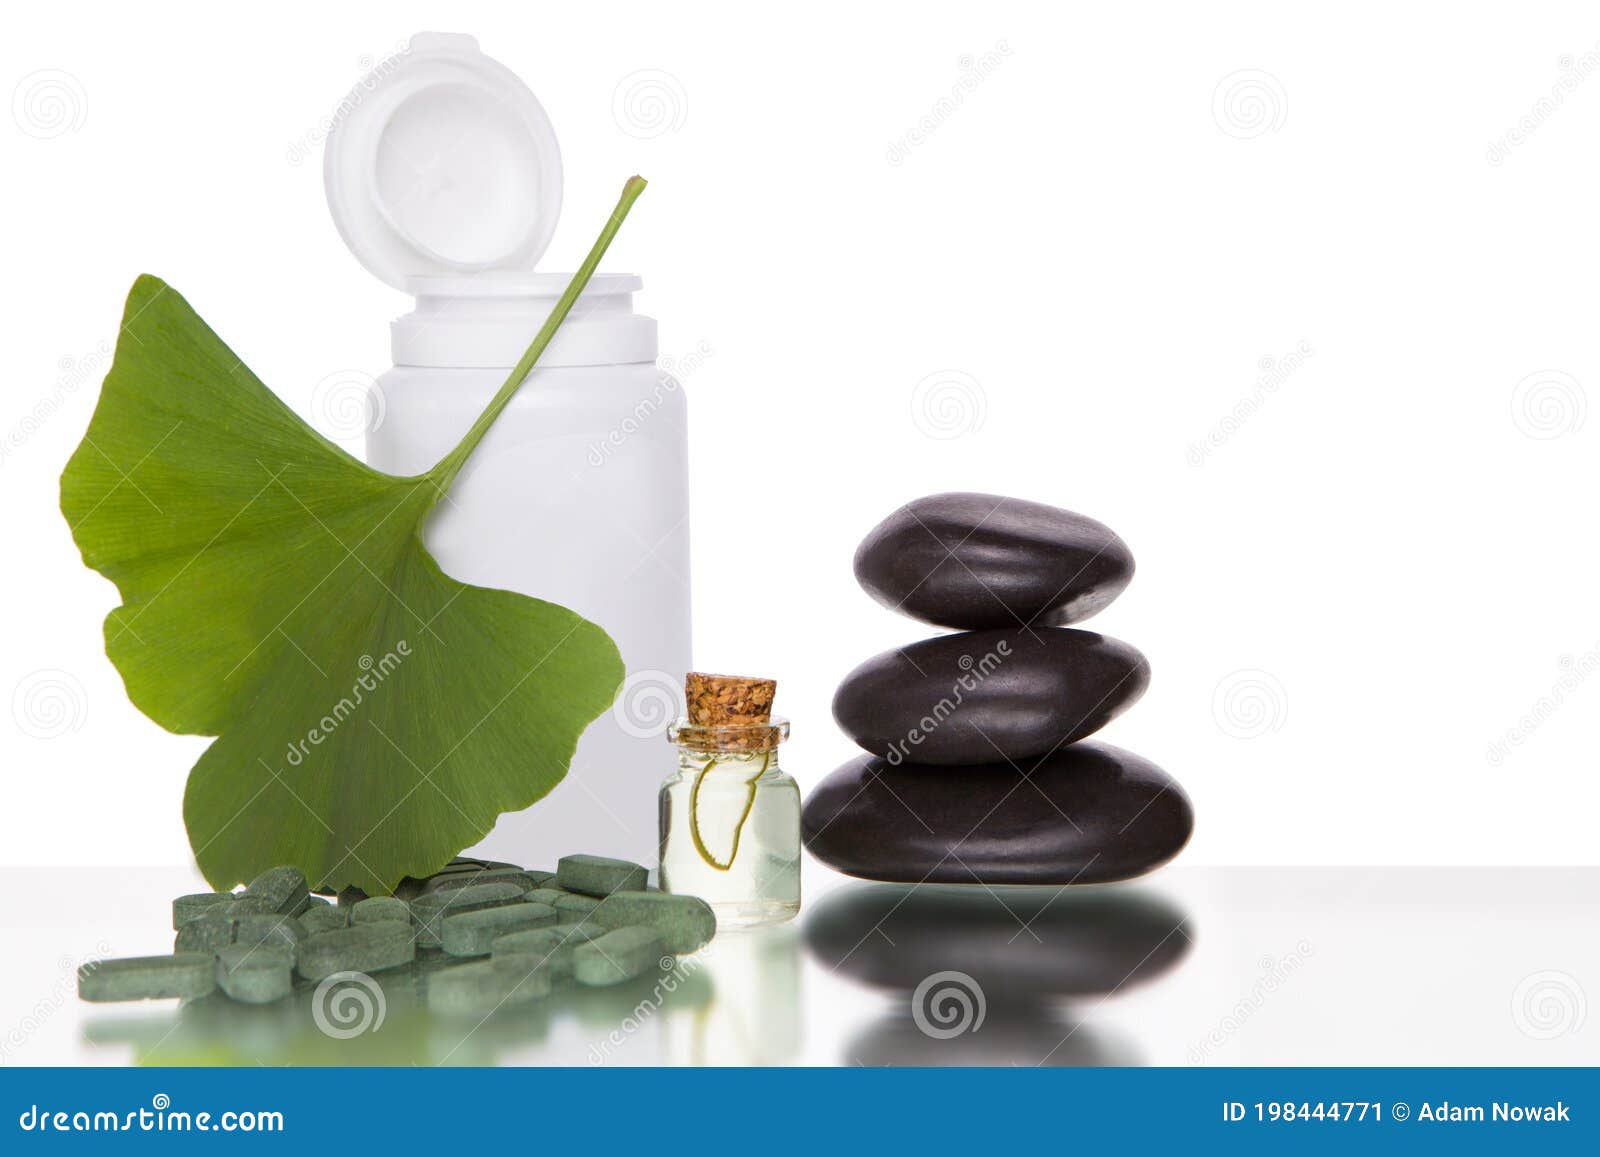 alternative medicine - ginkgo leaves and tablets n a bottle.  over white background